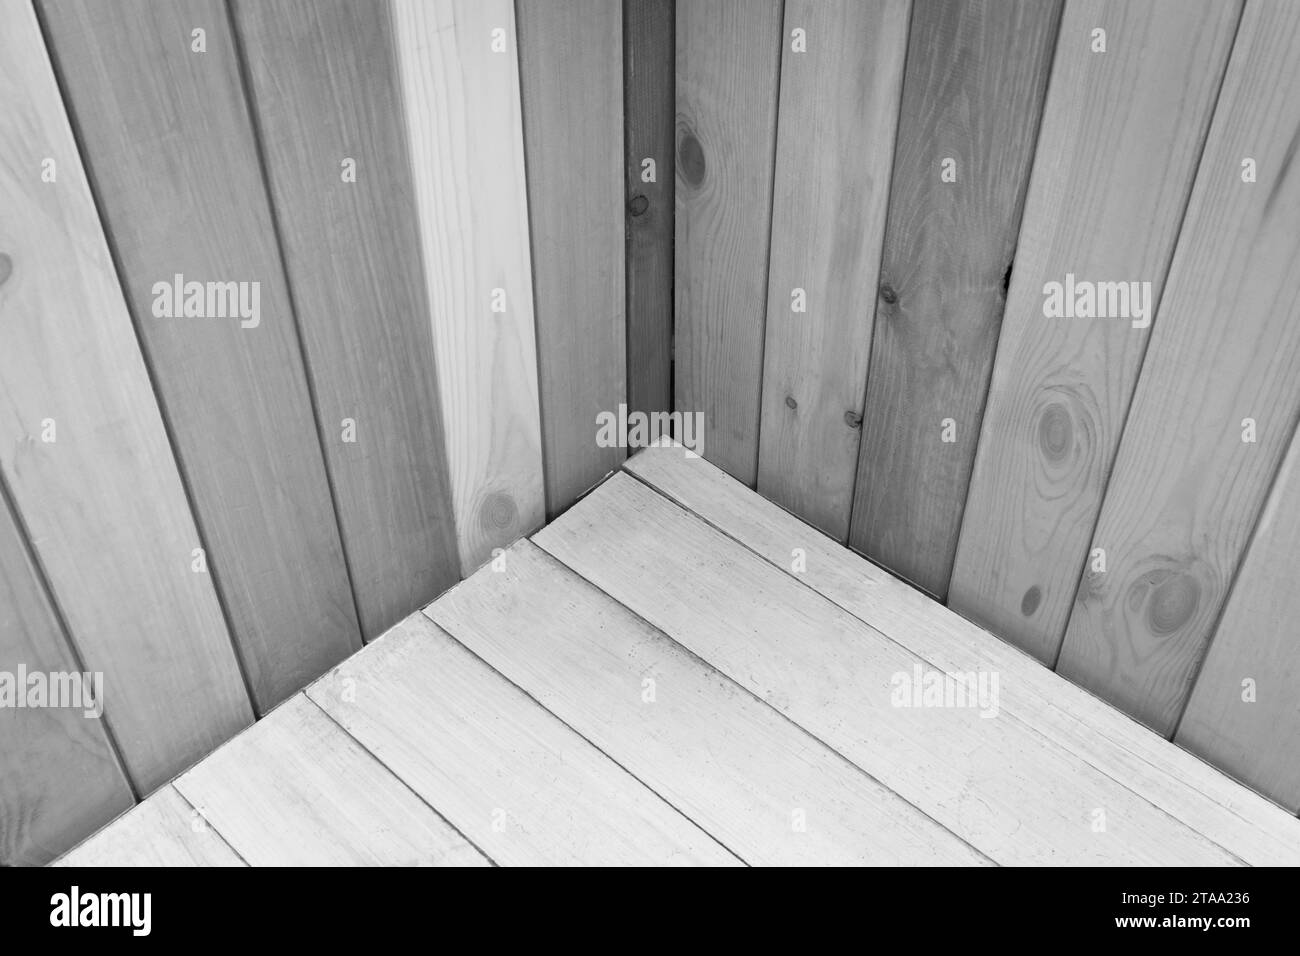 Wooden grey monochrome boards corner joint interior decor decoration design plank. Stock Photo